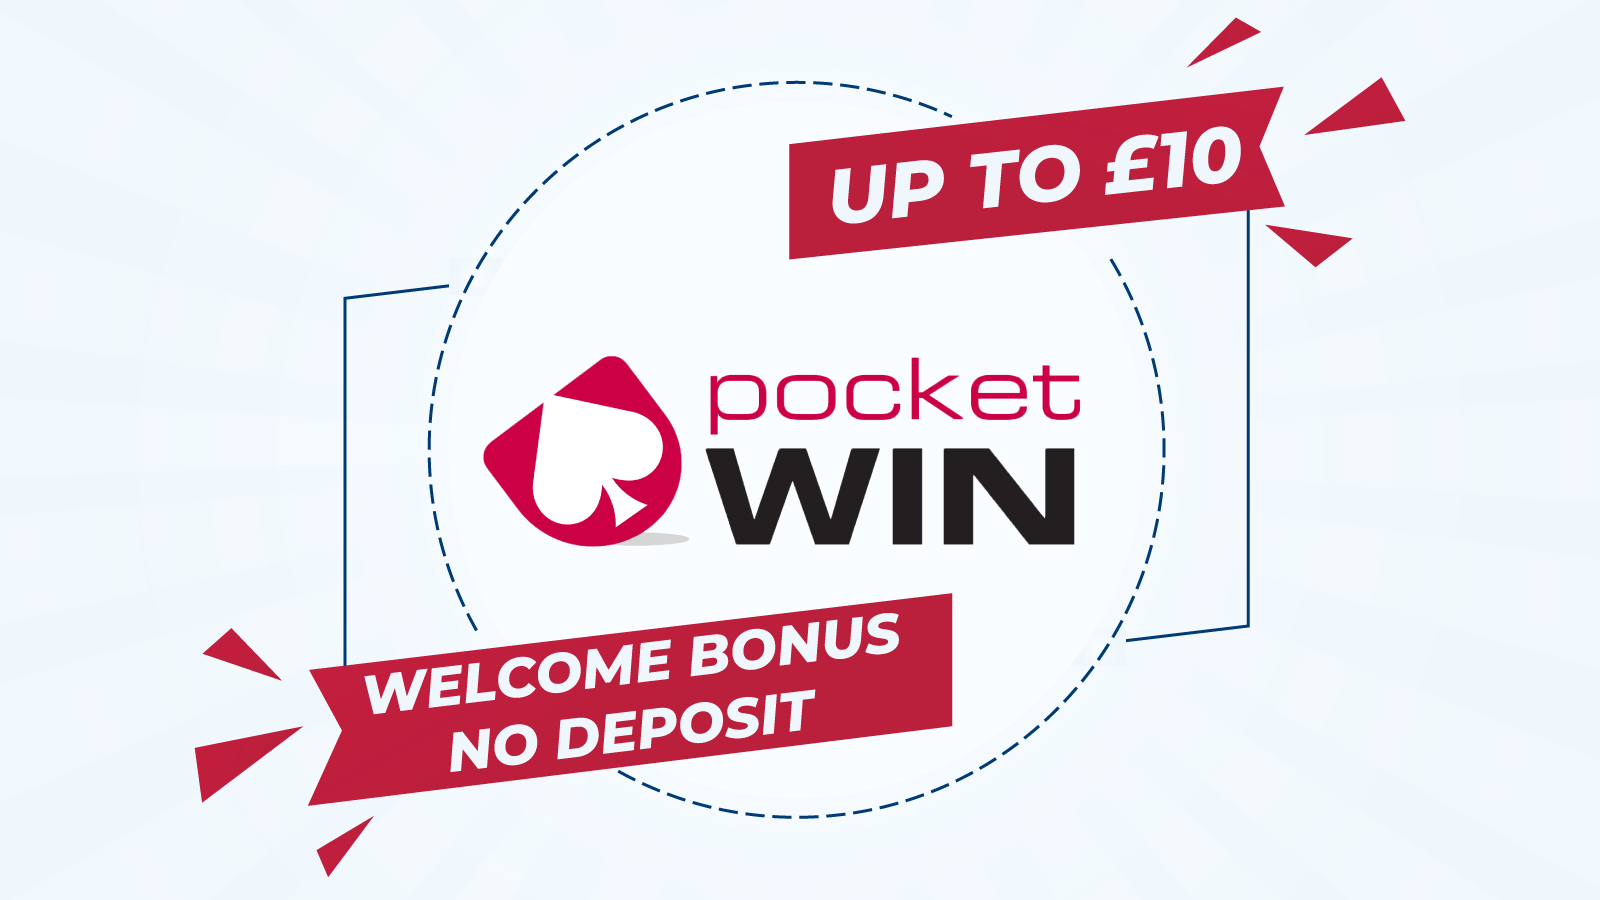 Up To £10 Welcome Bonus No Deposit at PocketWin